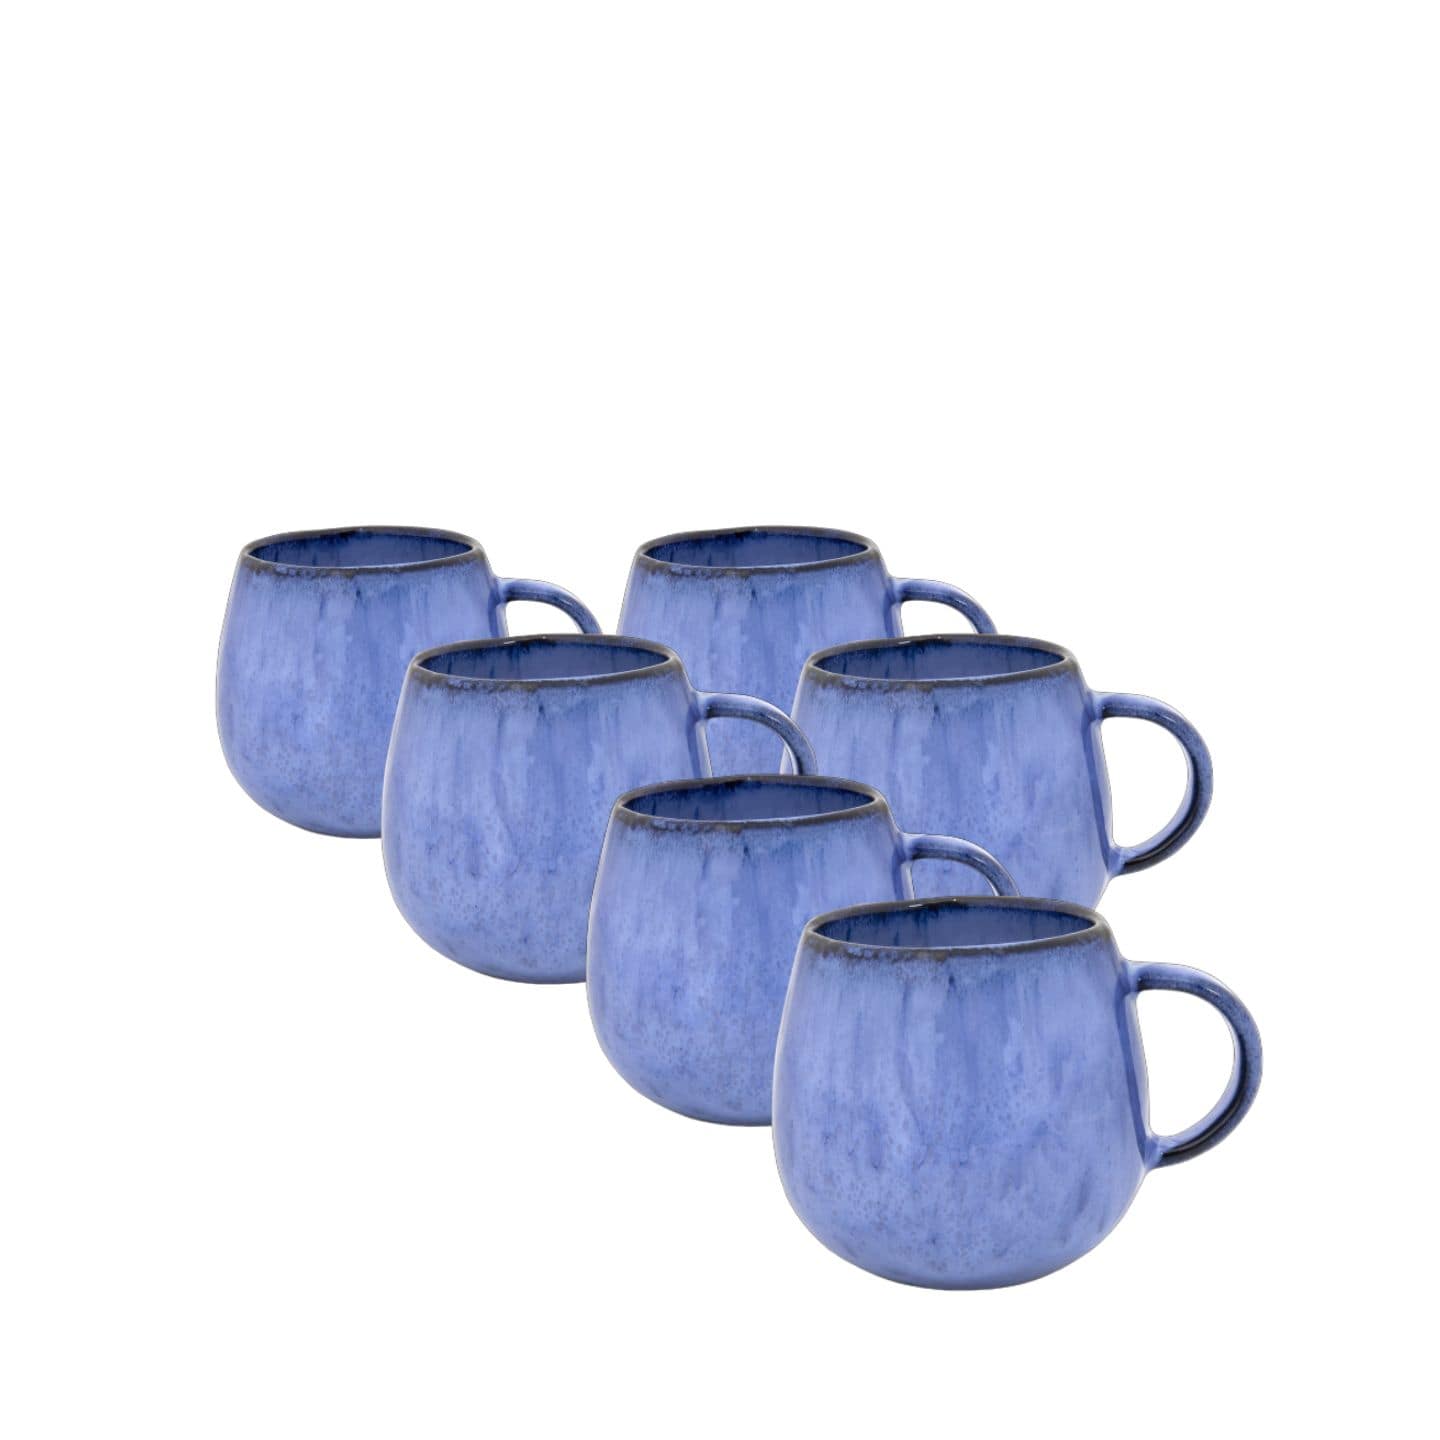 Keramik Tassen handgemacht blau